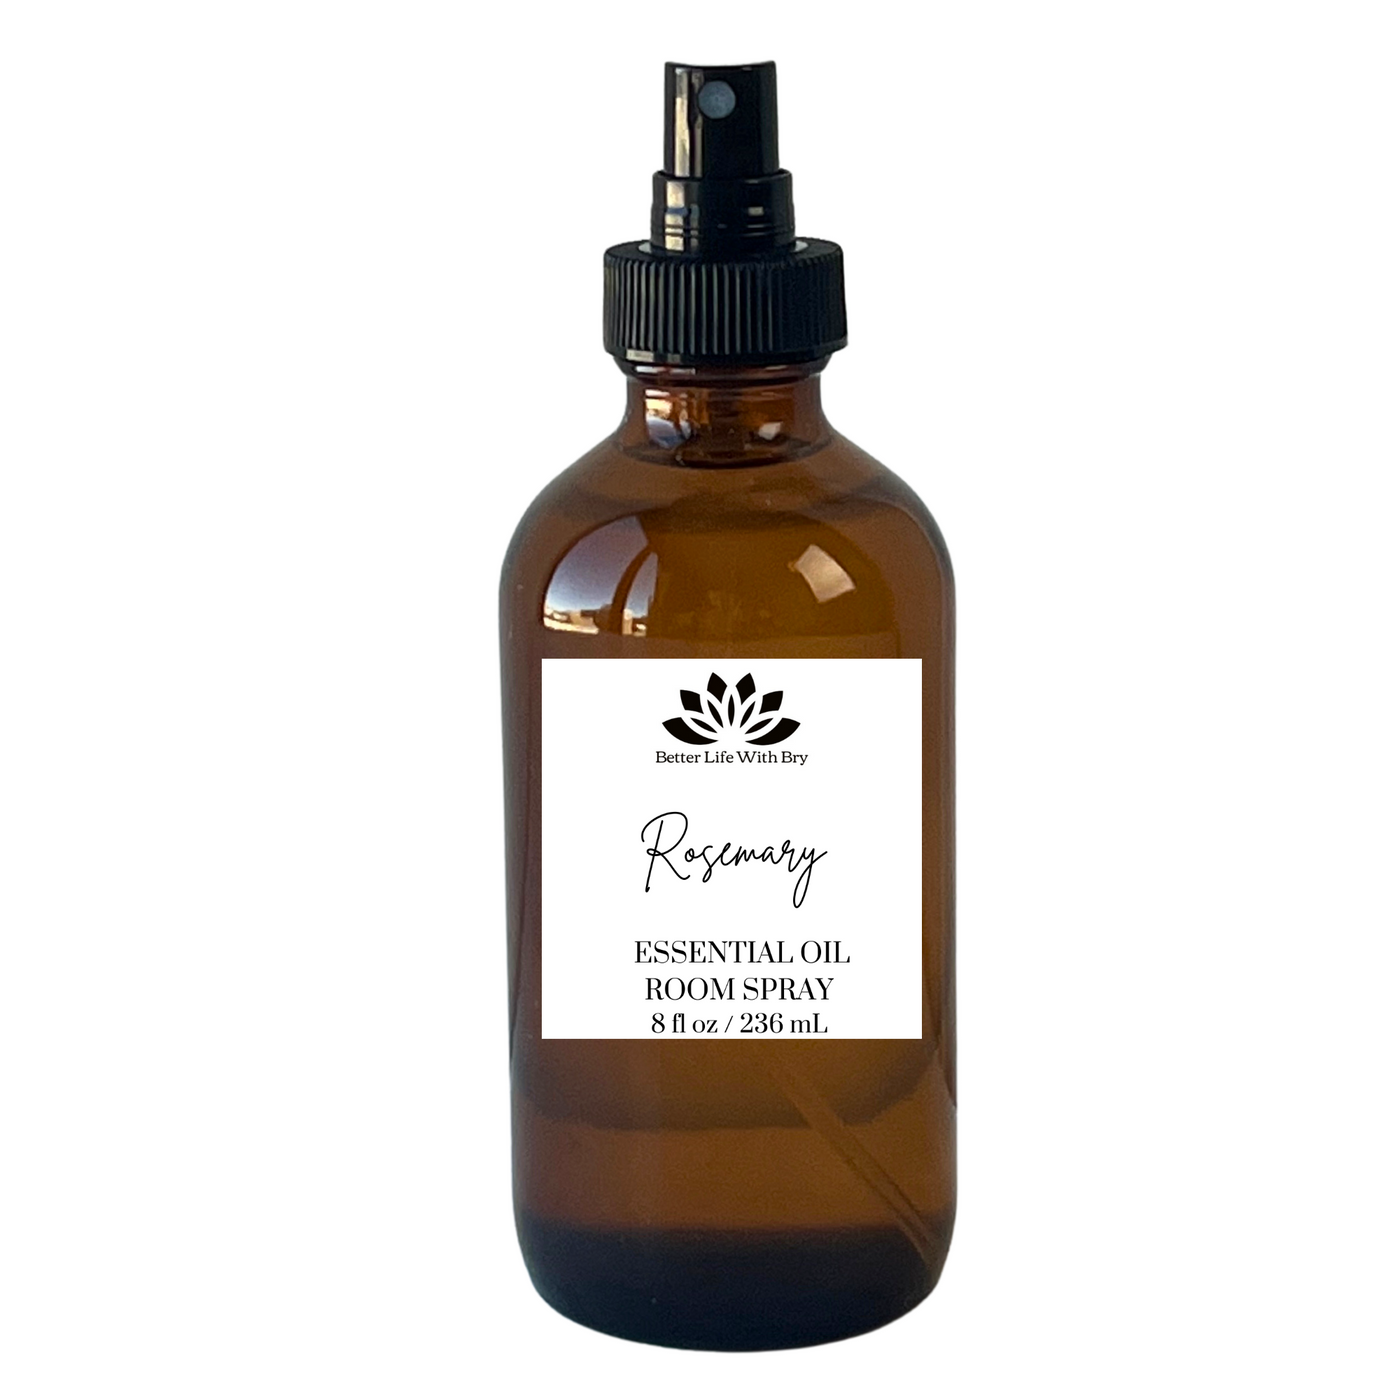 Rosemary Essential Oil Room Spray